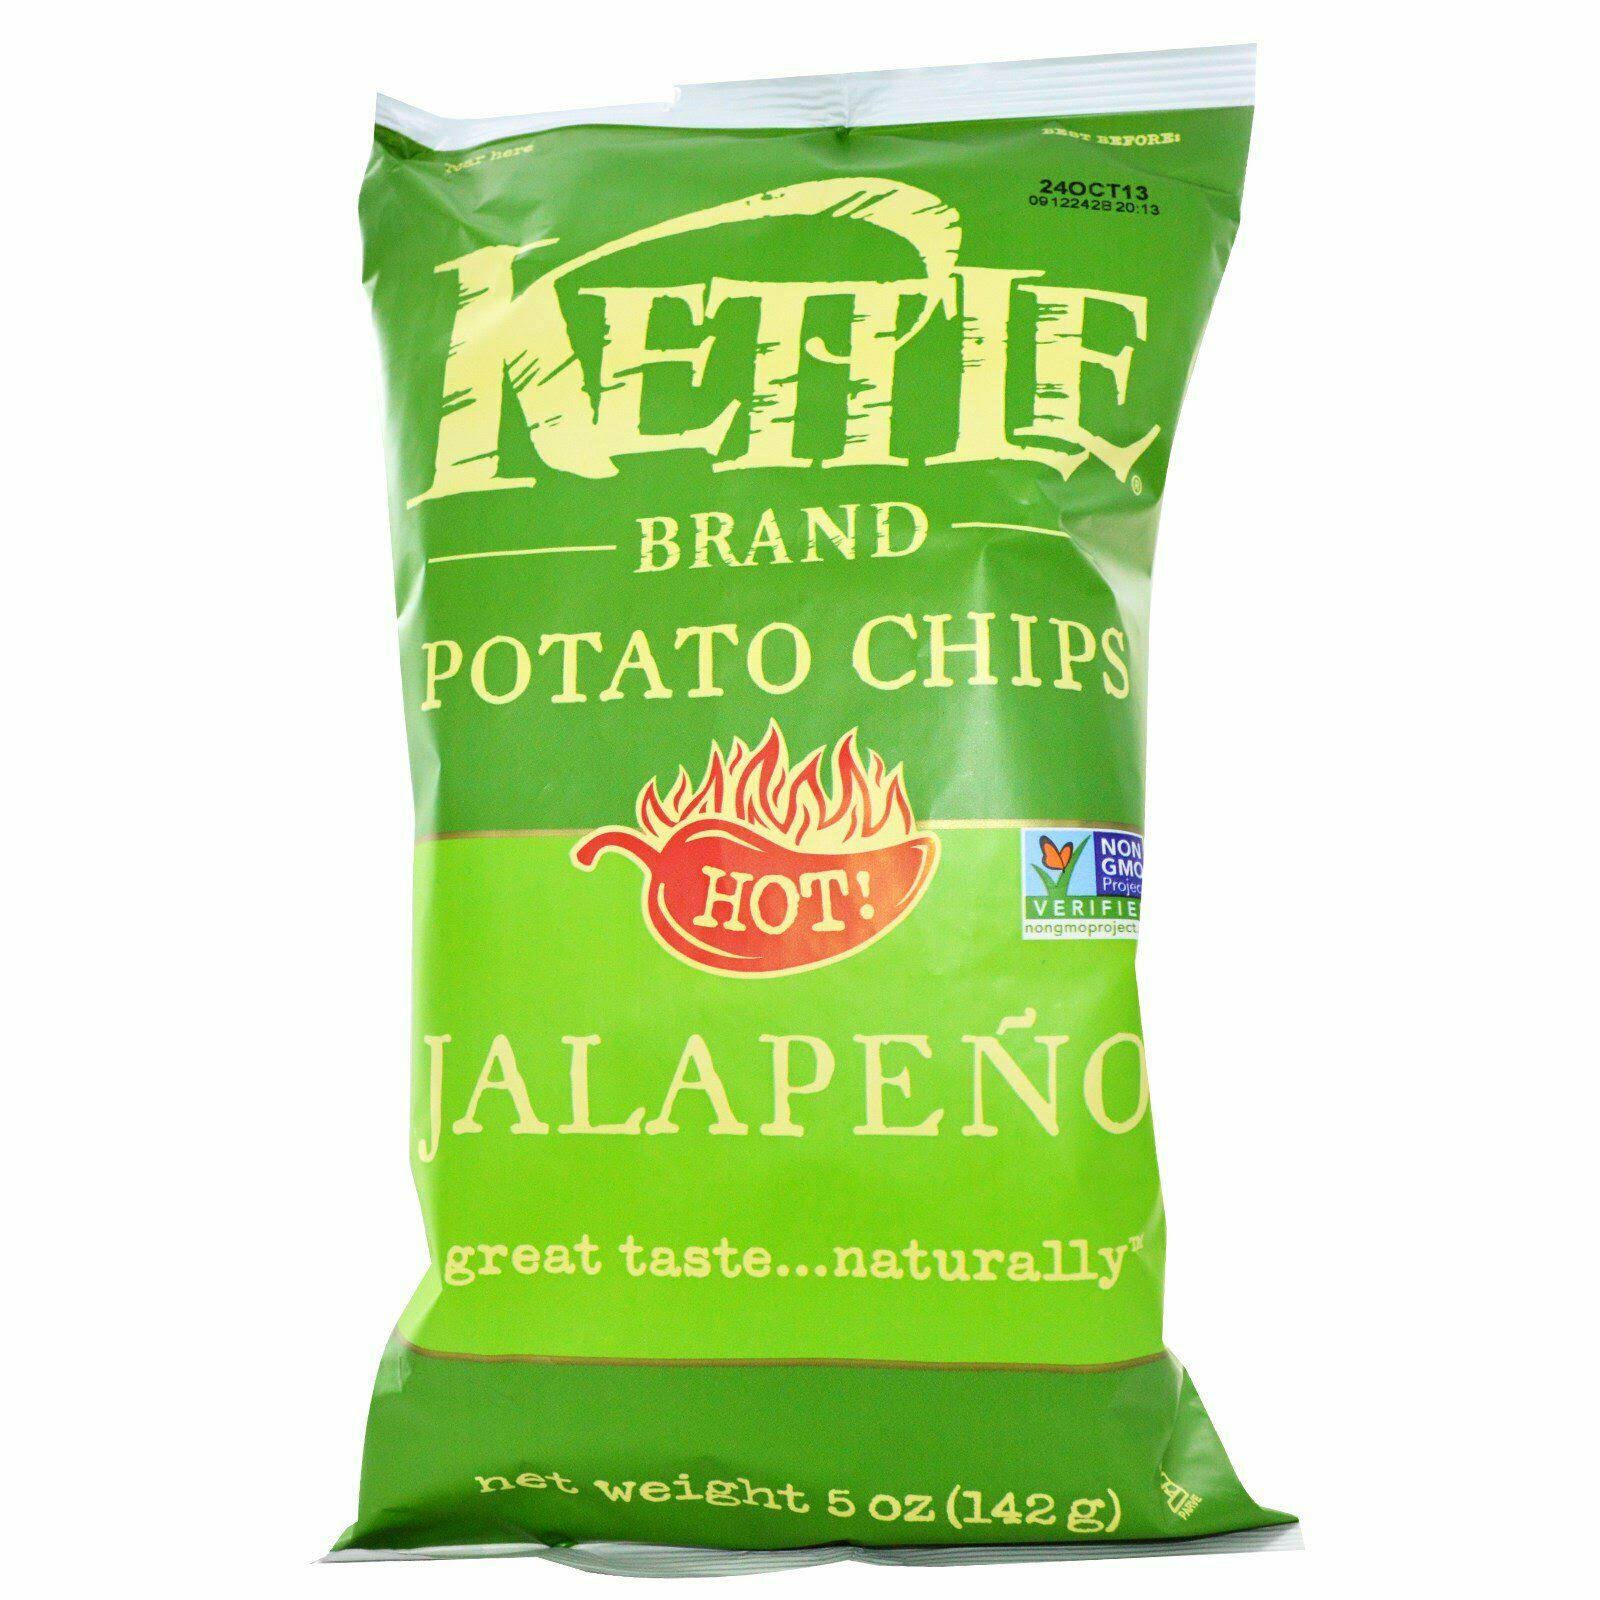 Kettle Brand Potato Chips - Jalapeno, 142g